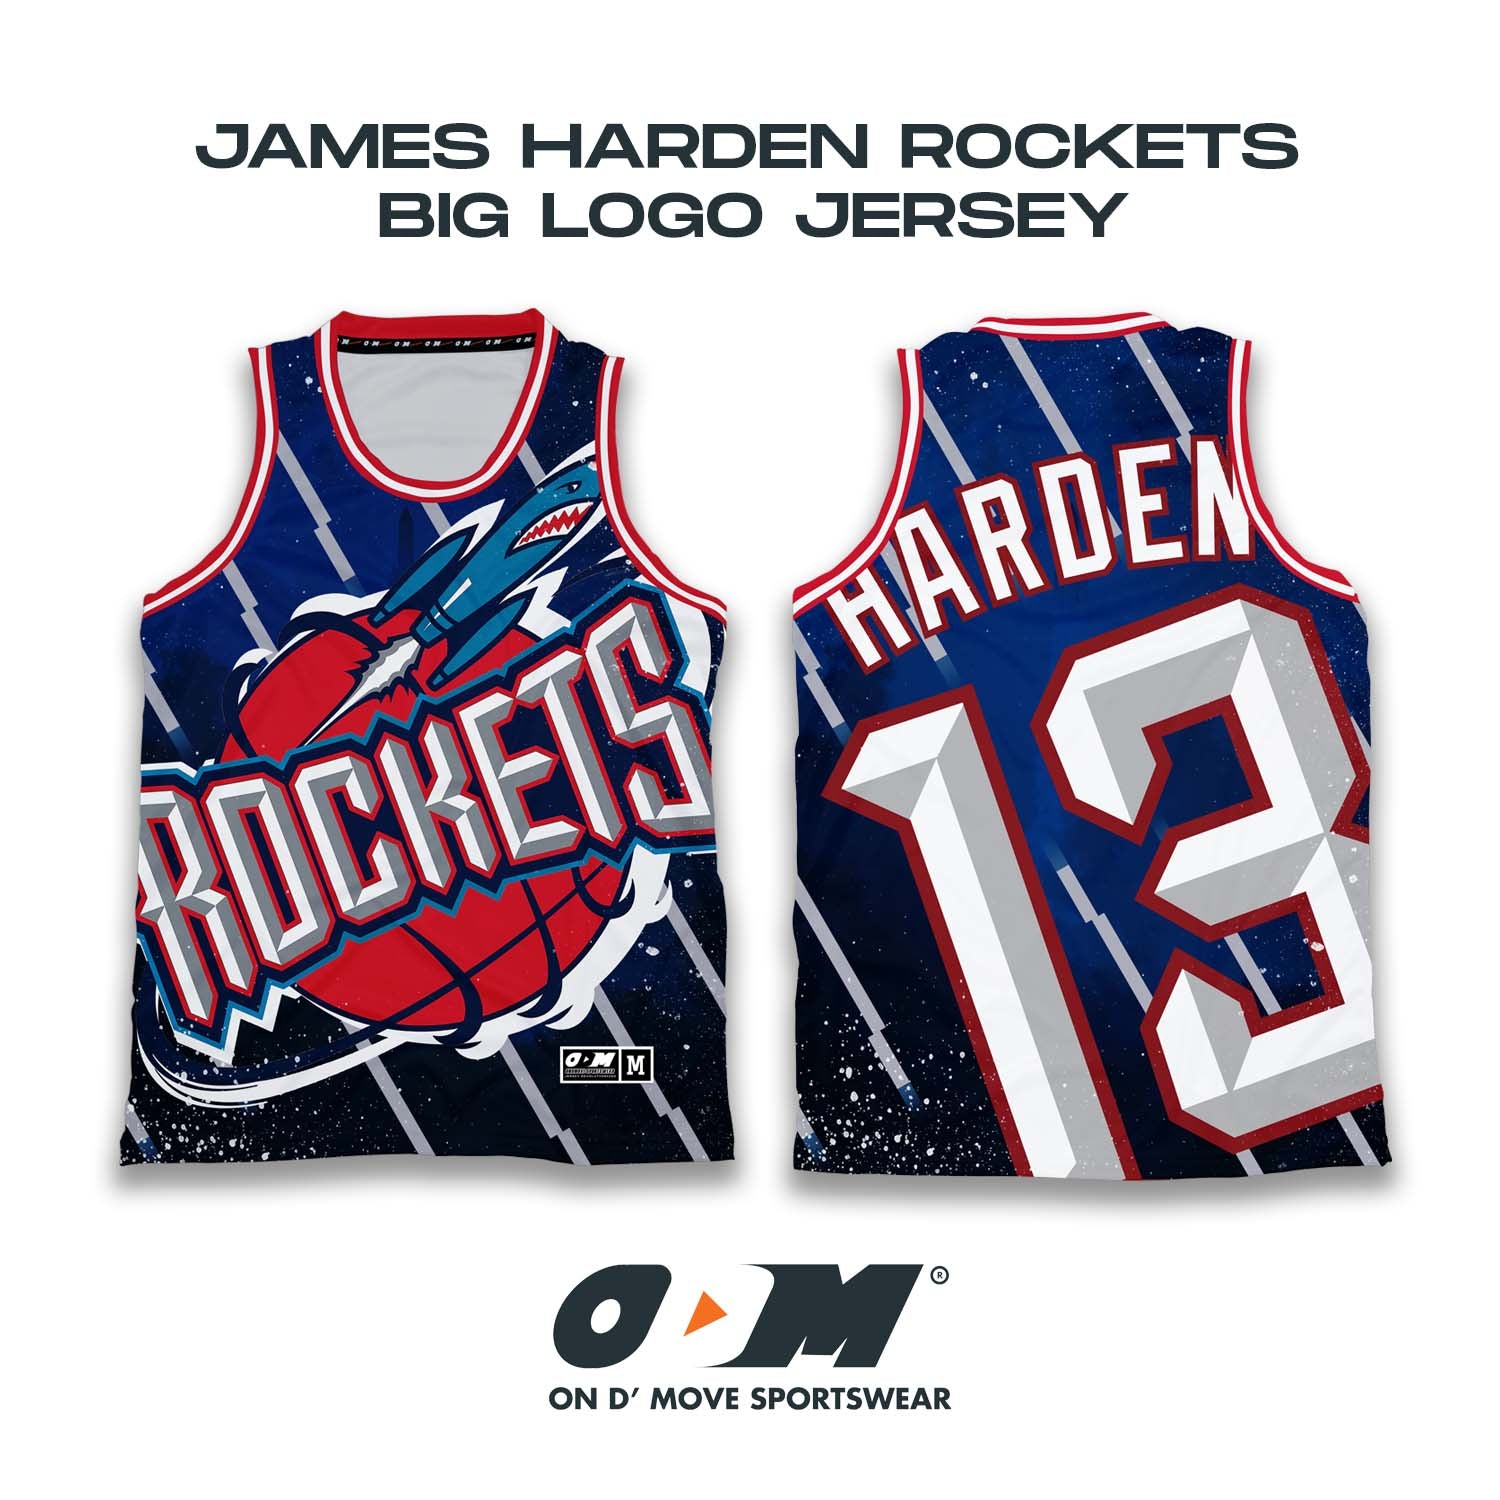 James Harden Rockets Big Logo Jersey